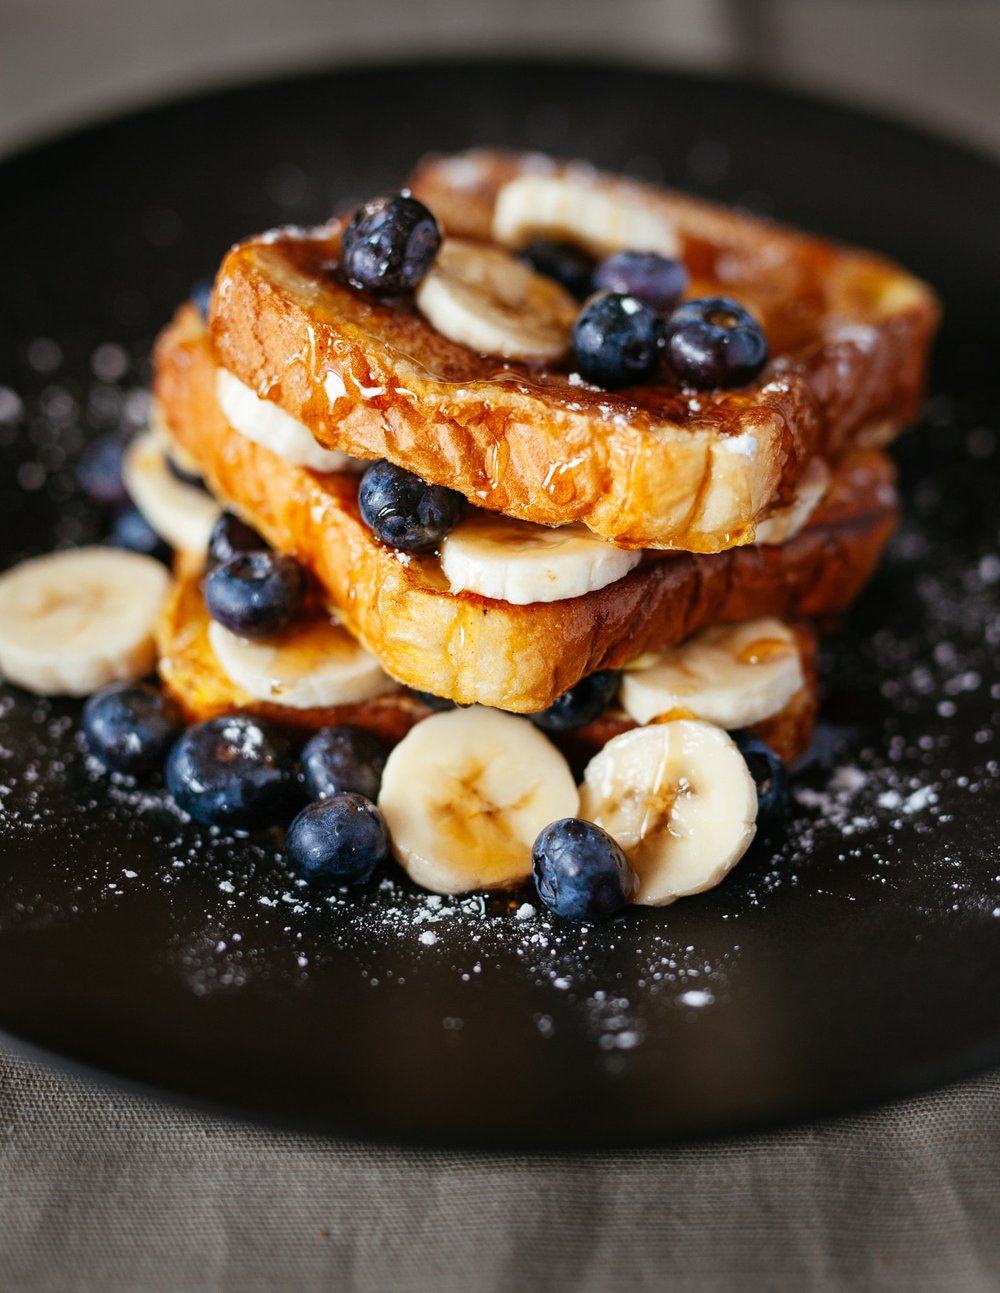 Blueberry and banana pancakes